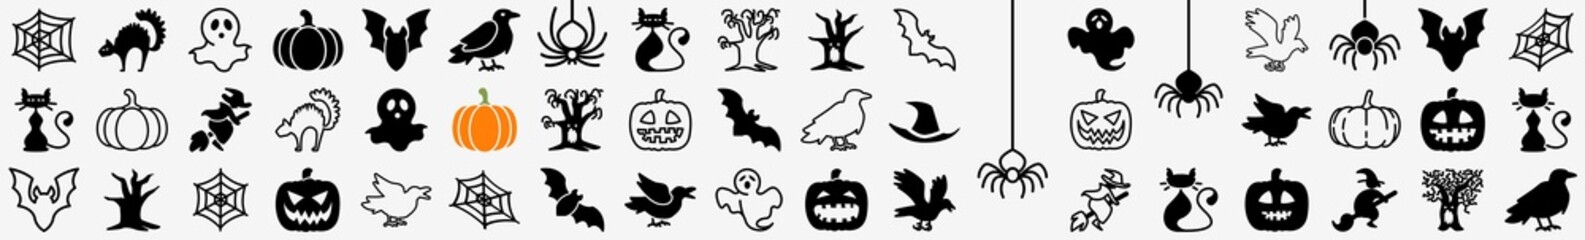 Halloween Icon Set | Halloween Icons Illustration Set | Halloween Vector Isolated Collection